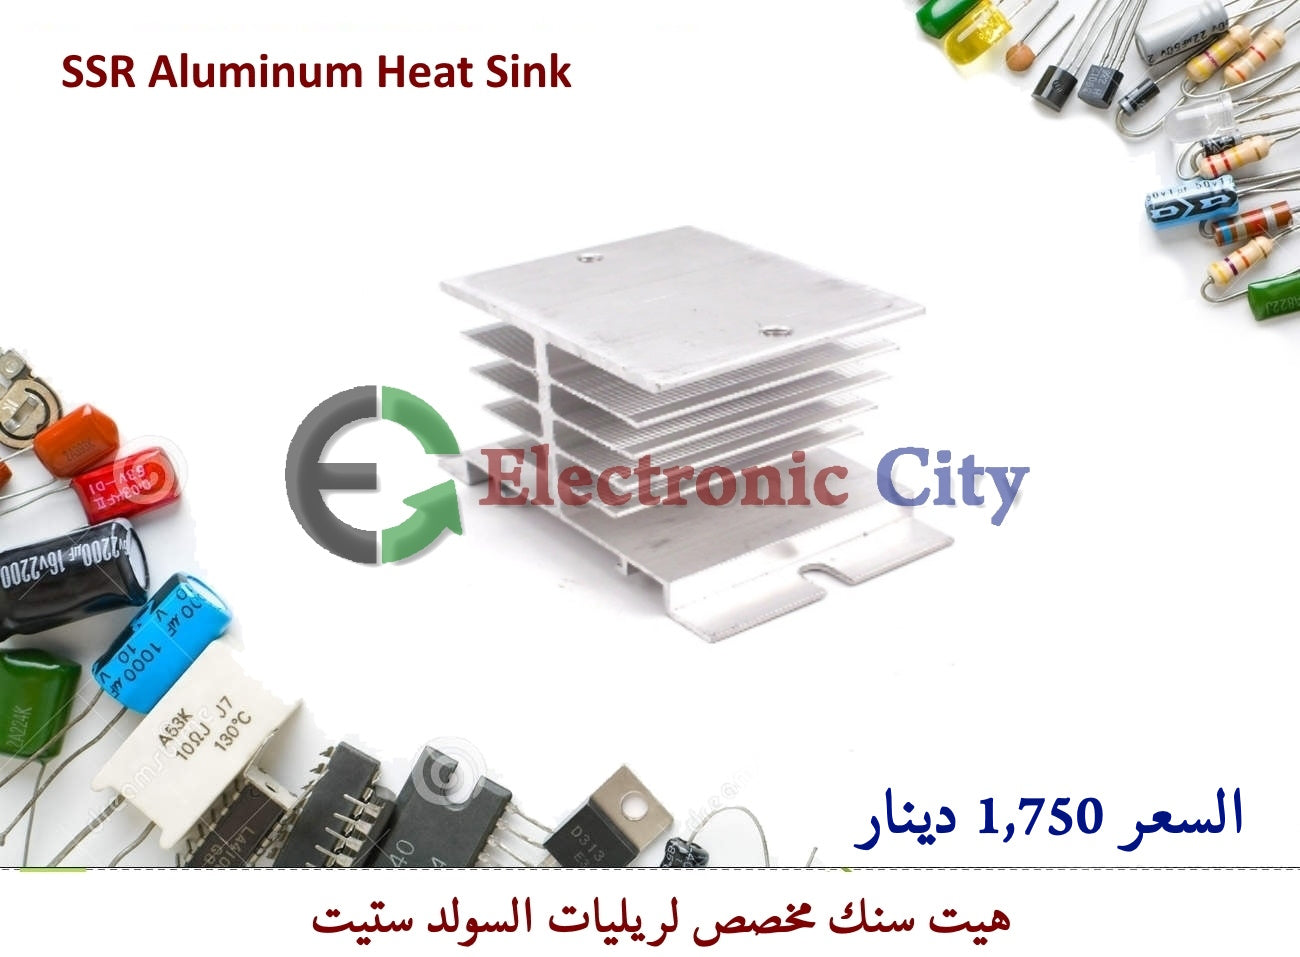 SSR Aluminum Heat Sink